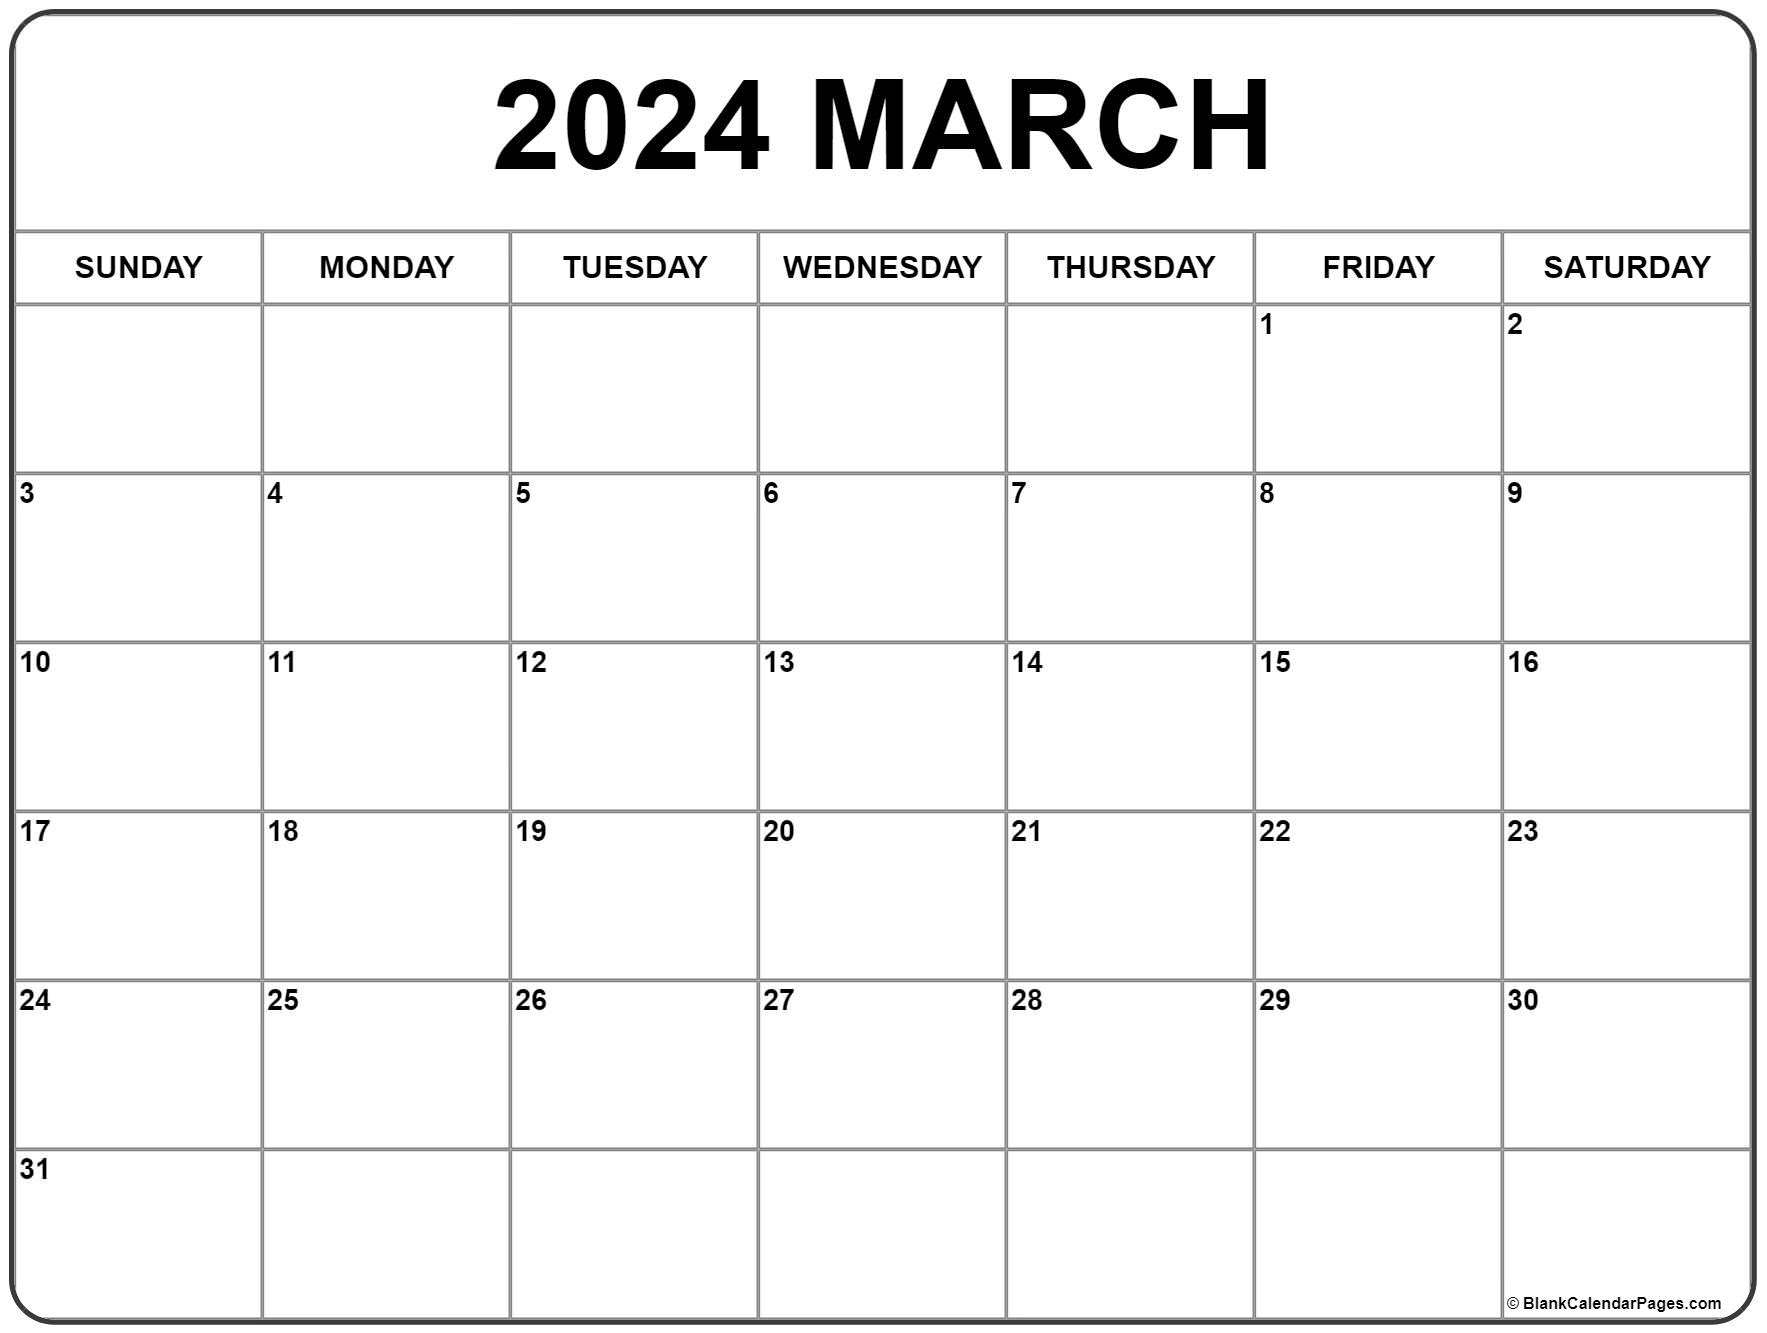 March 2024 Calendar | Free Printable Calendar | Free Printable Calendar 2024 March